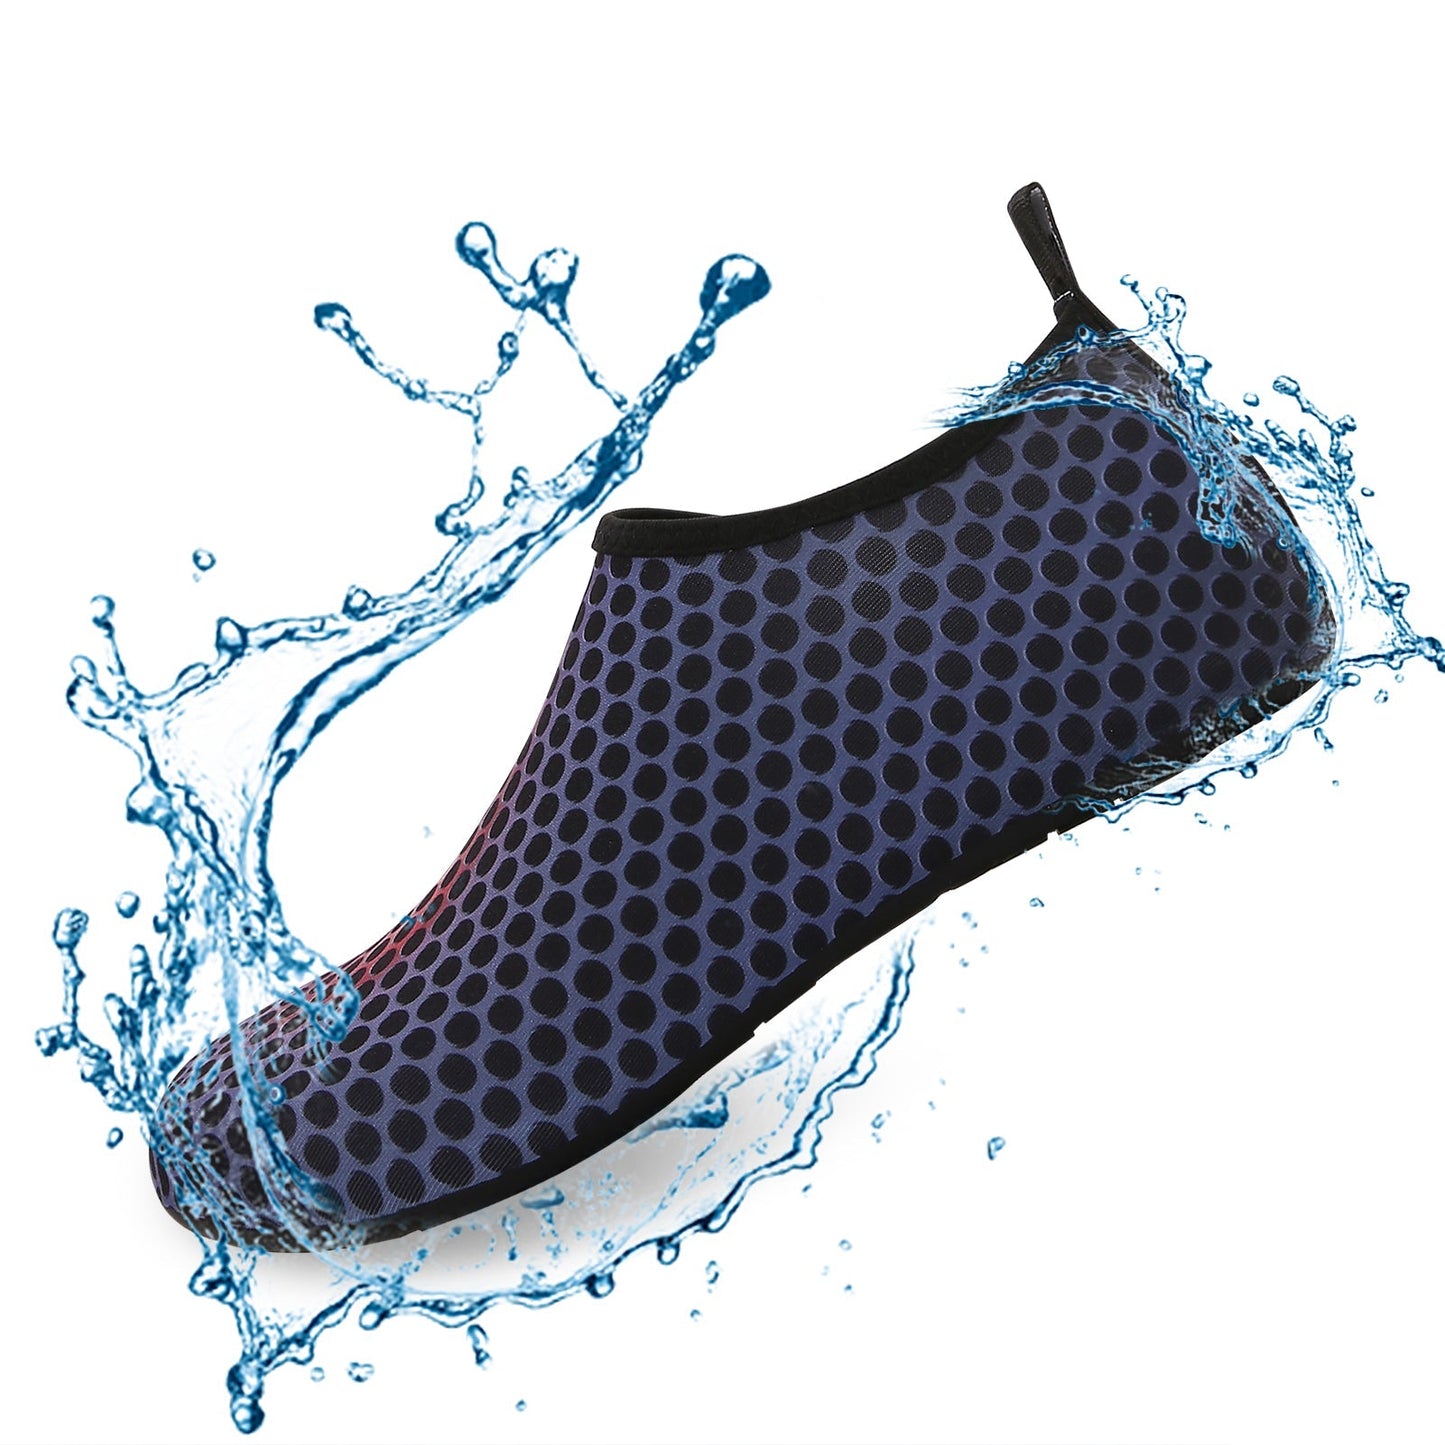 Men and Women a Slip On Barefoot Quick-Dry Beach Aqua Yoga Water Shoes (Black Dots/Purple)